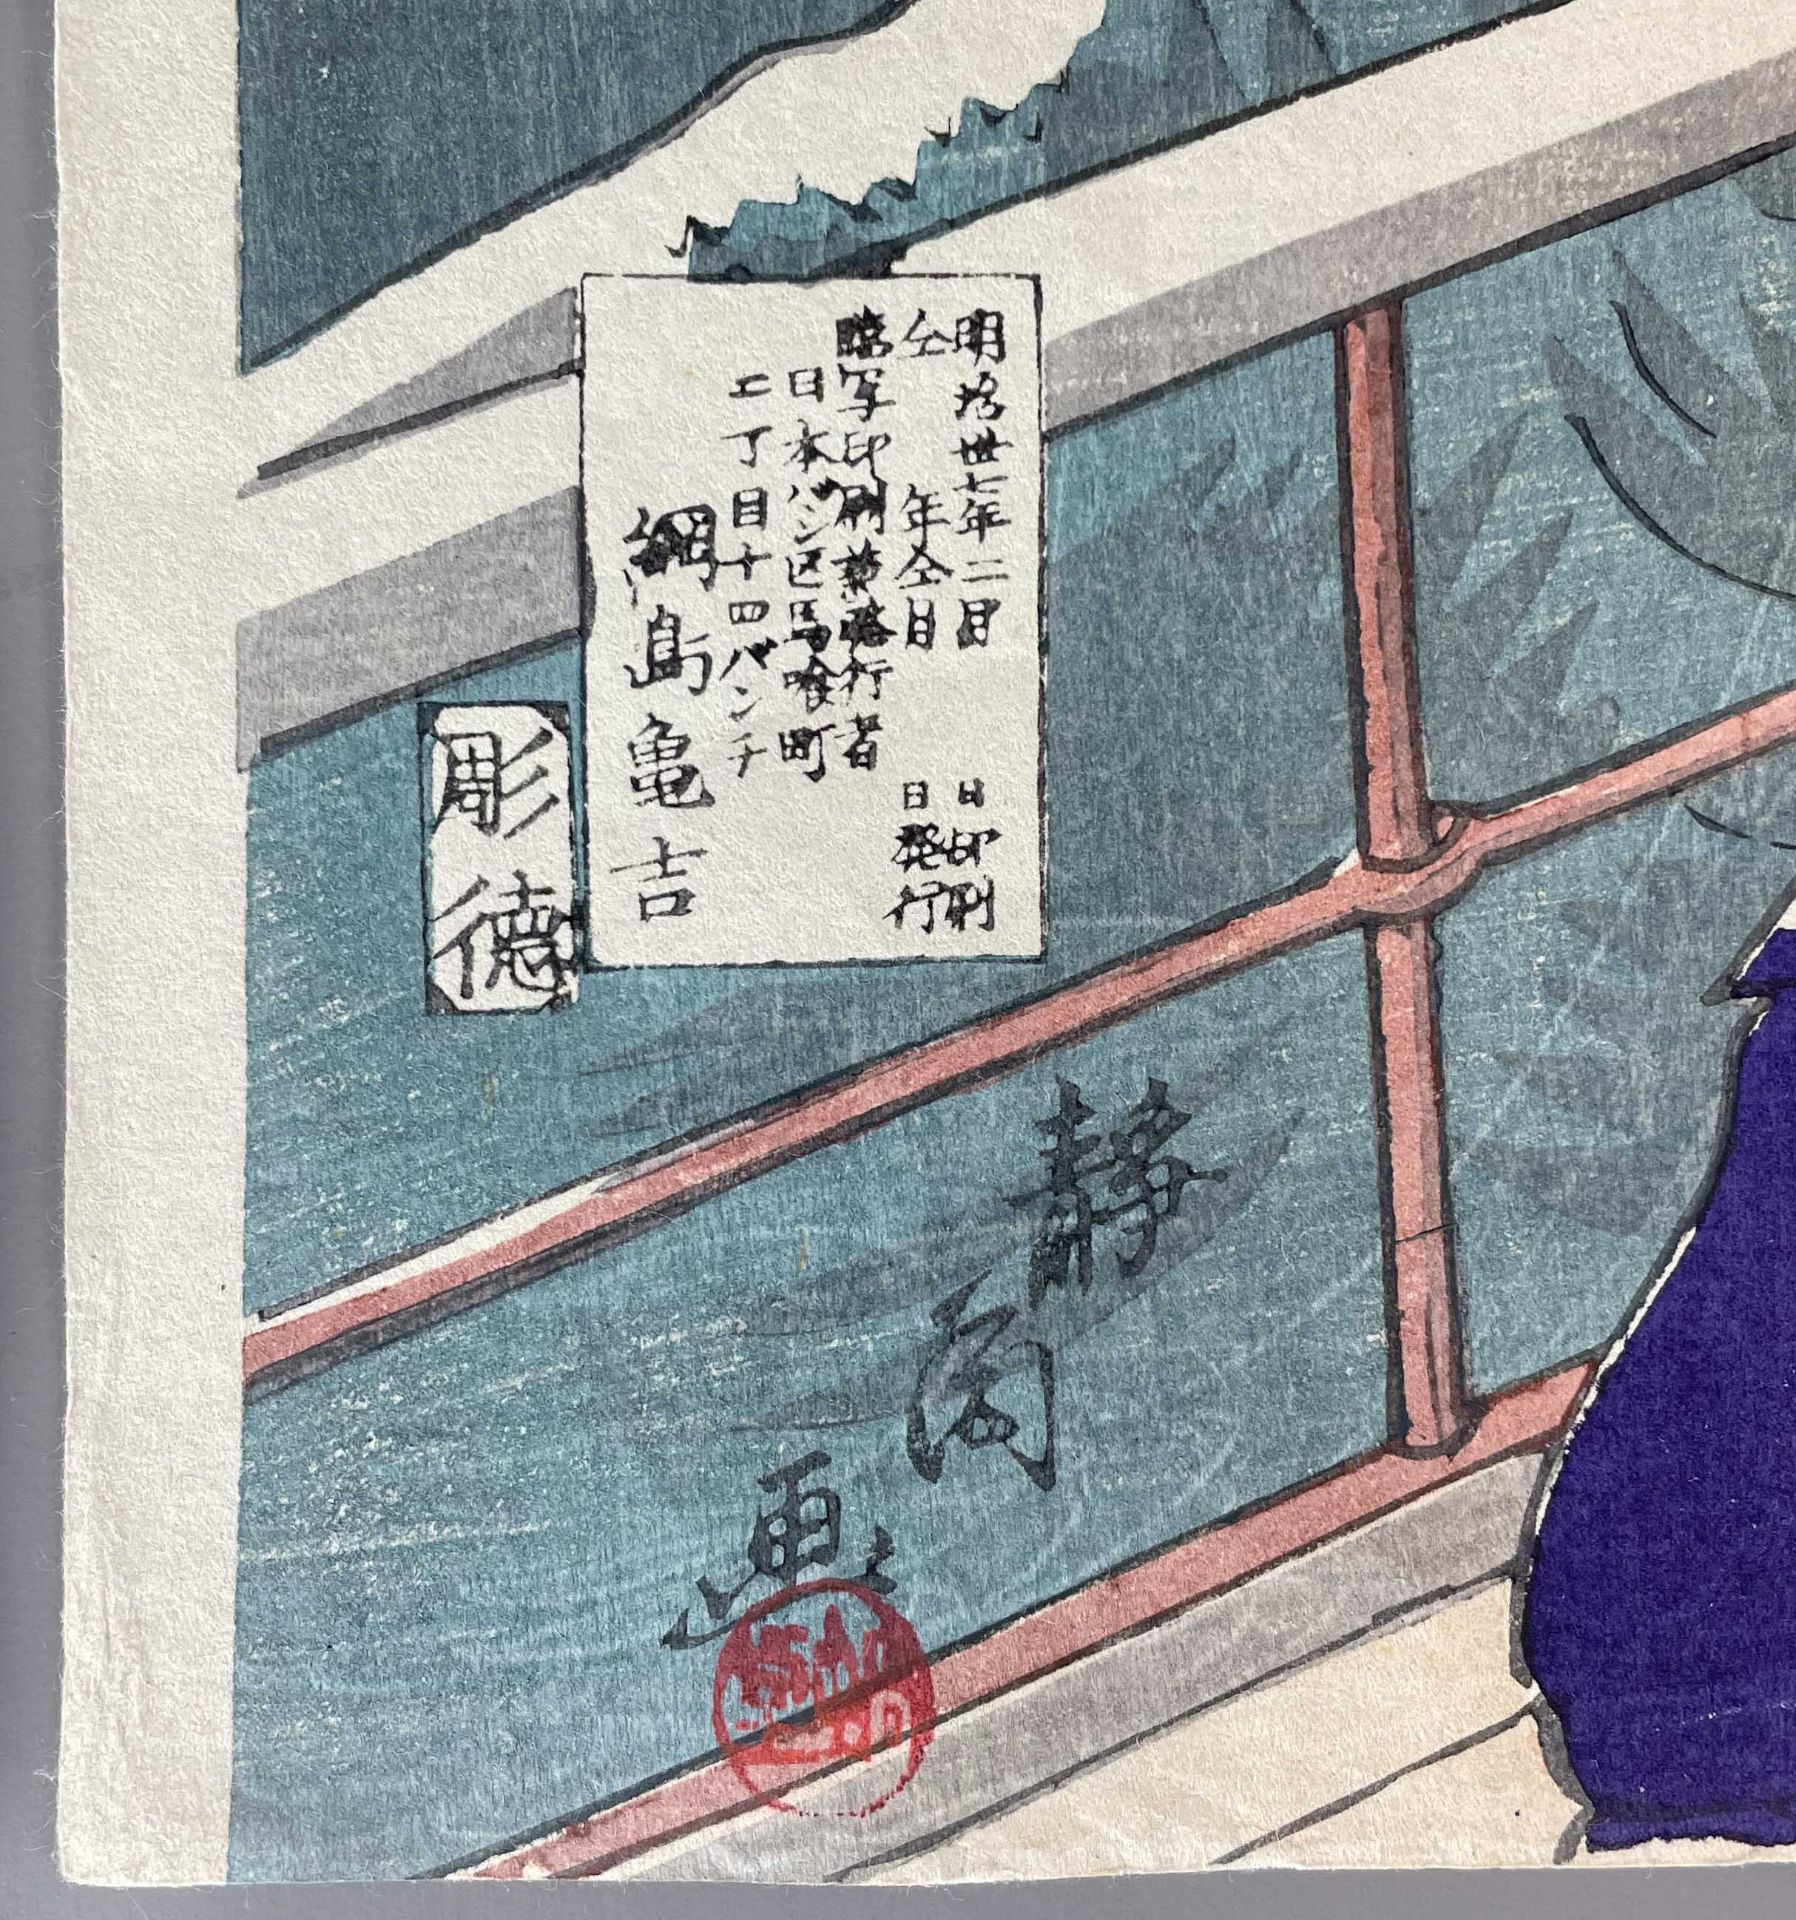 Konvolut Holzschnitte. Japan. 19. / 20. Jahrhundert. Seeschlachten Russisch - Japanischen Krieges, - Image 6 of 12